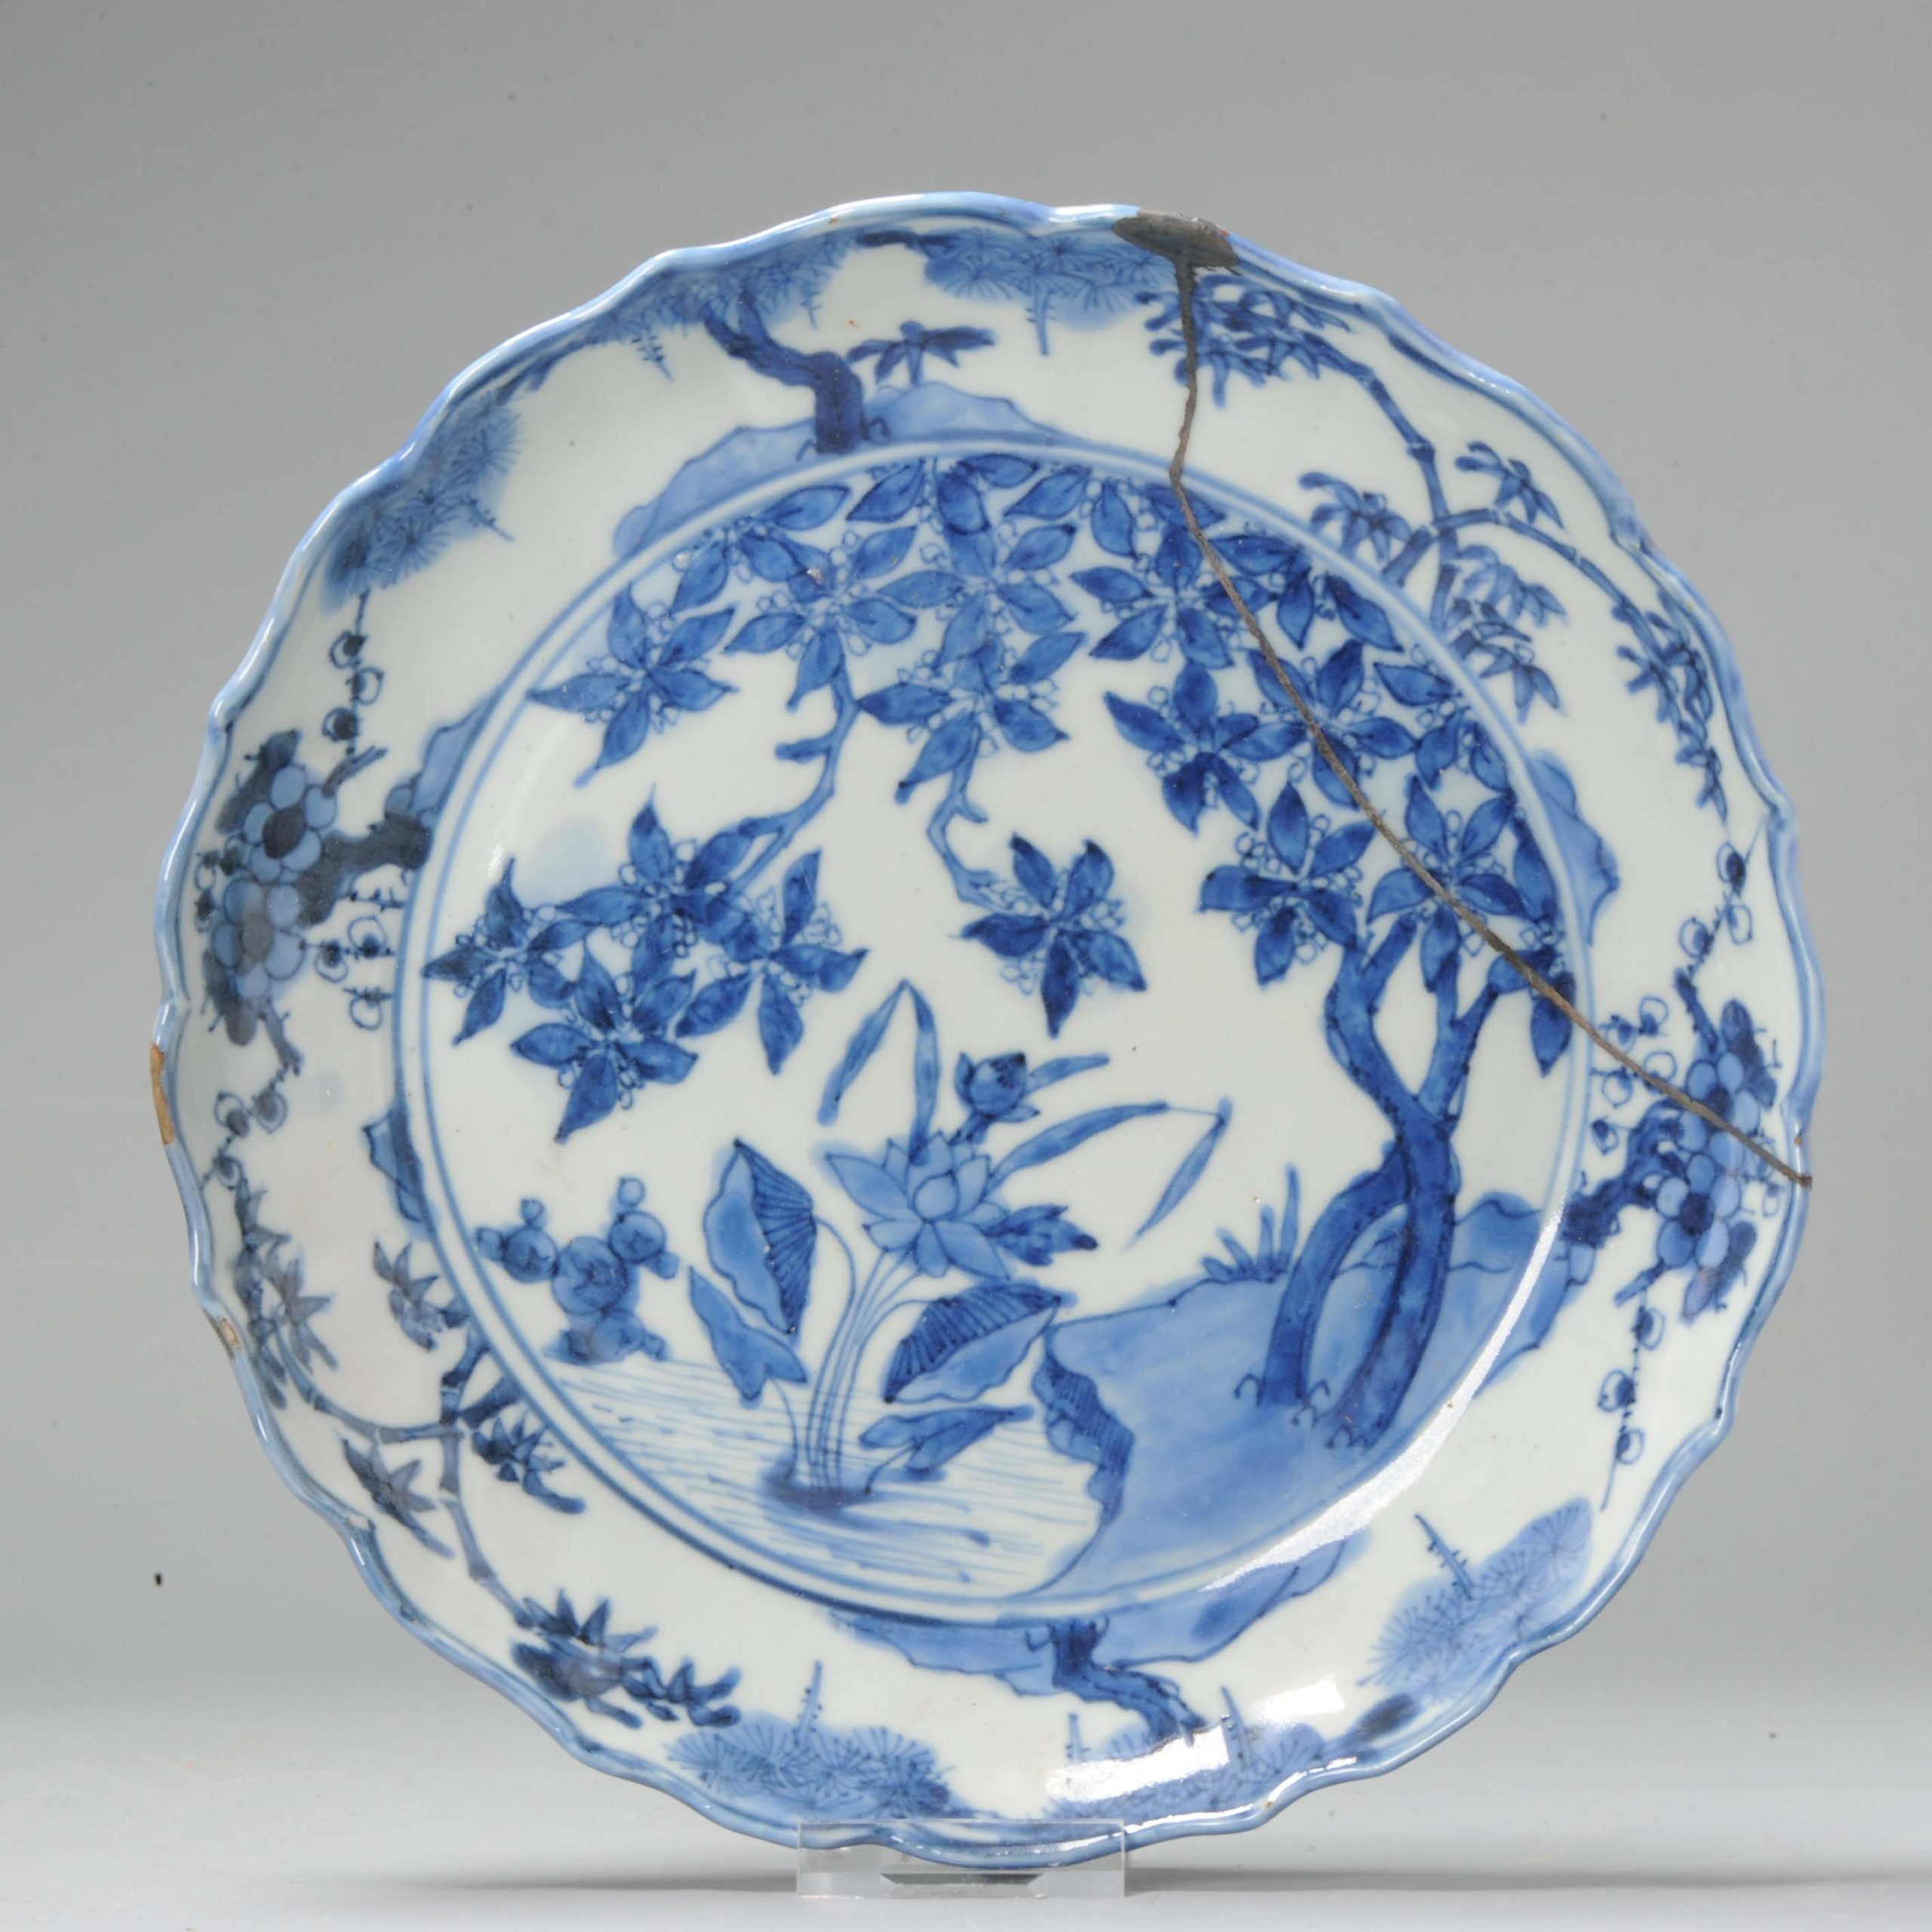 Rare Ca 1600-1660 Chinese Porcelain Ming Period Kosometsuke Plates with Lotus Pond